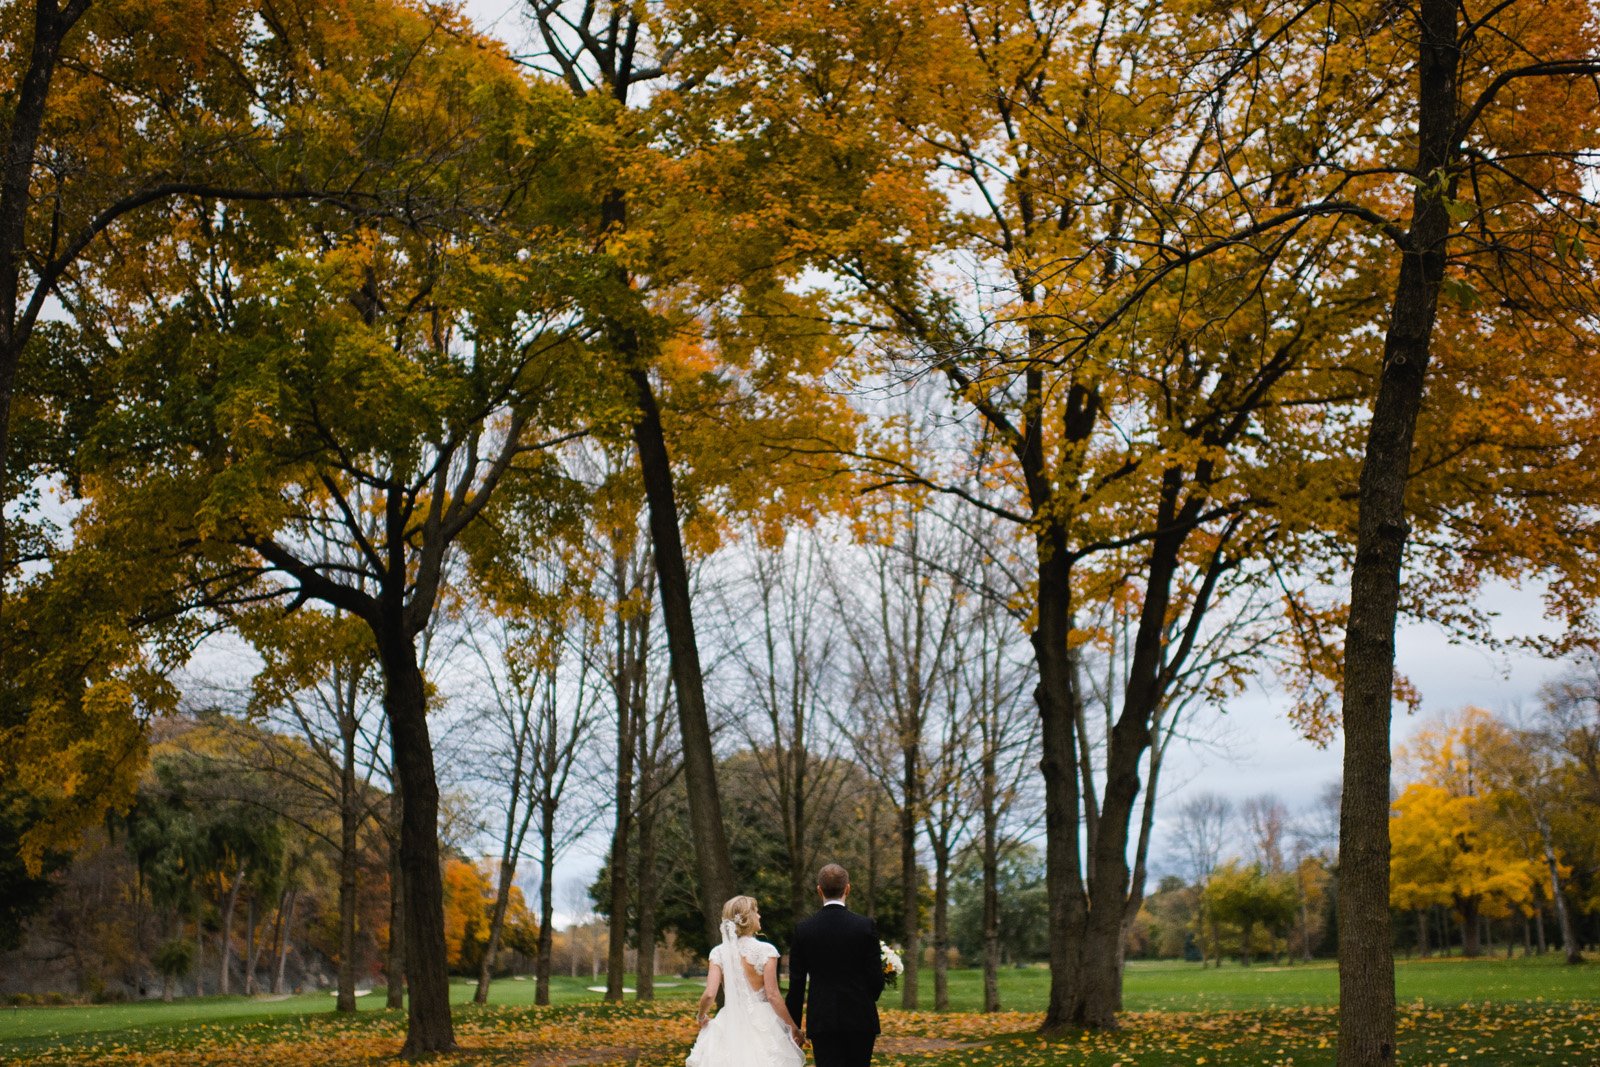 wedding photos with fall colours | toronto husband and wife wedding photography team jenn and dave stark